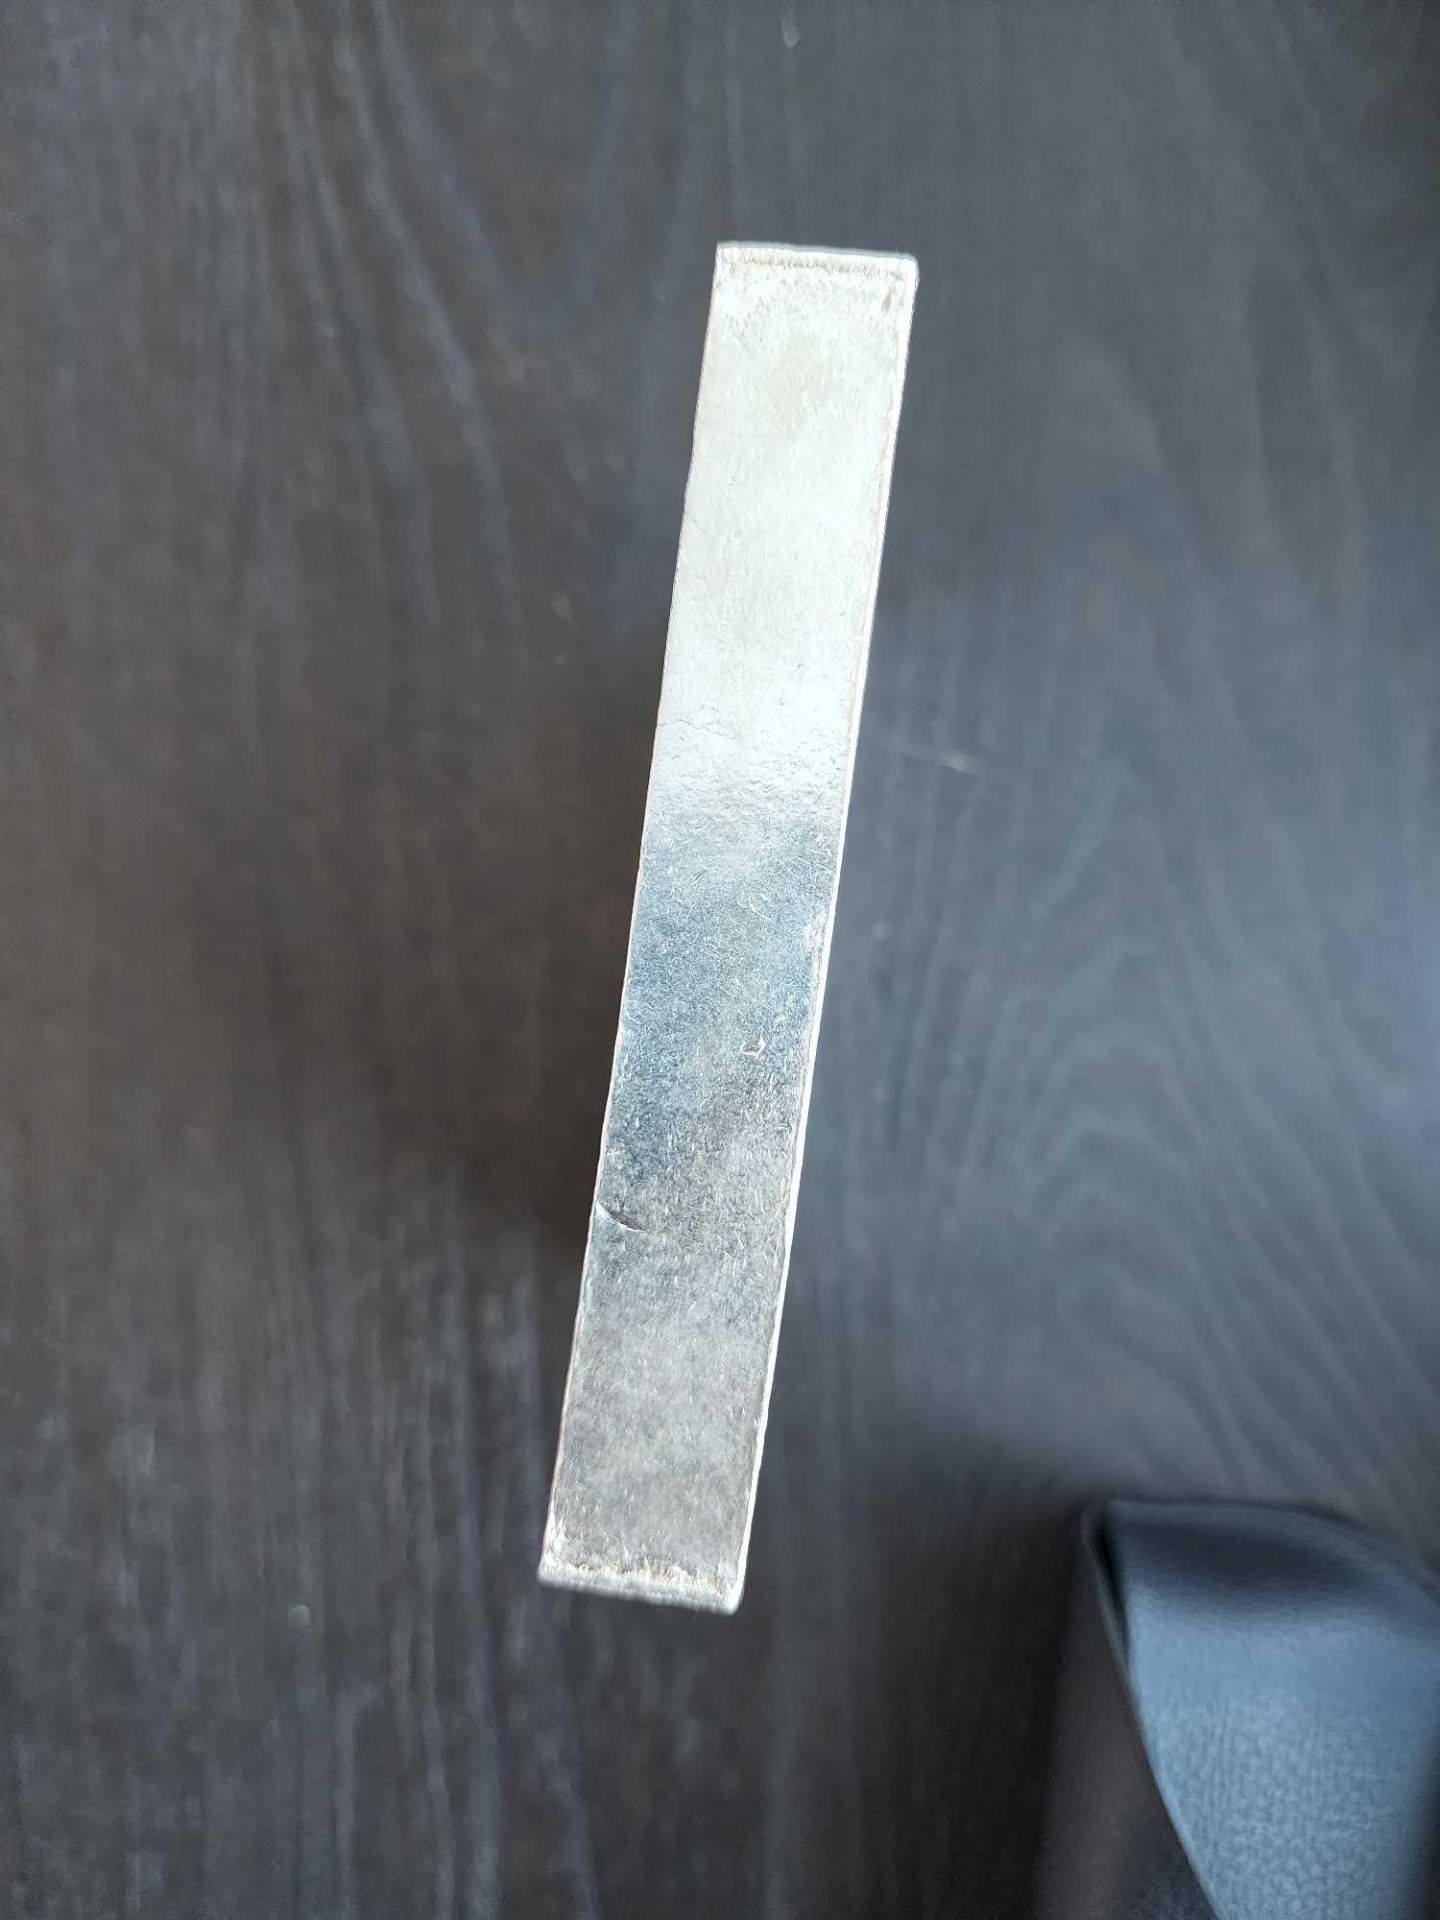 100 oz Silver Bar - Image 5 of 5